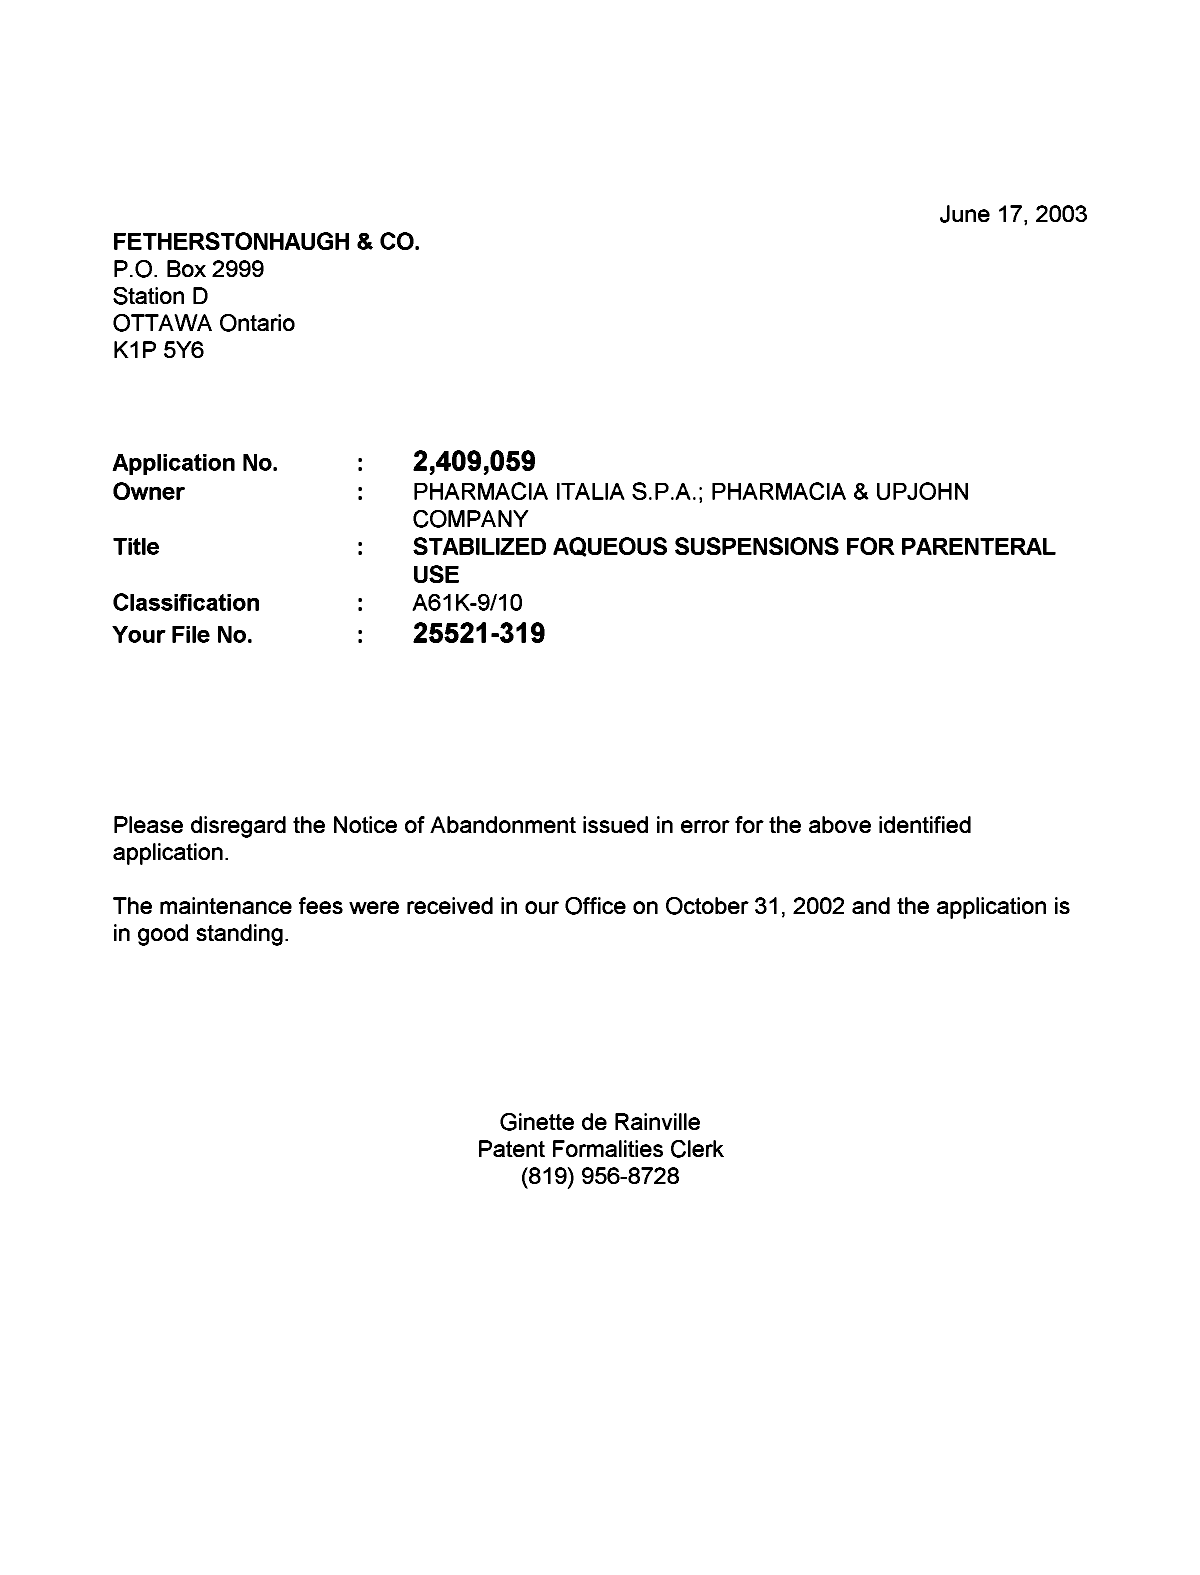 Canadian Patent Document 2409059. Correspondence 20021210. Image 1 of 1